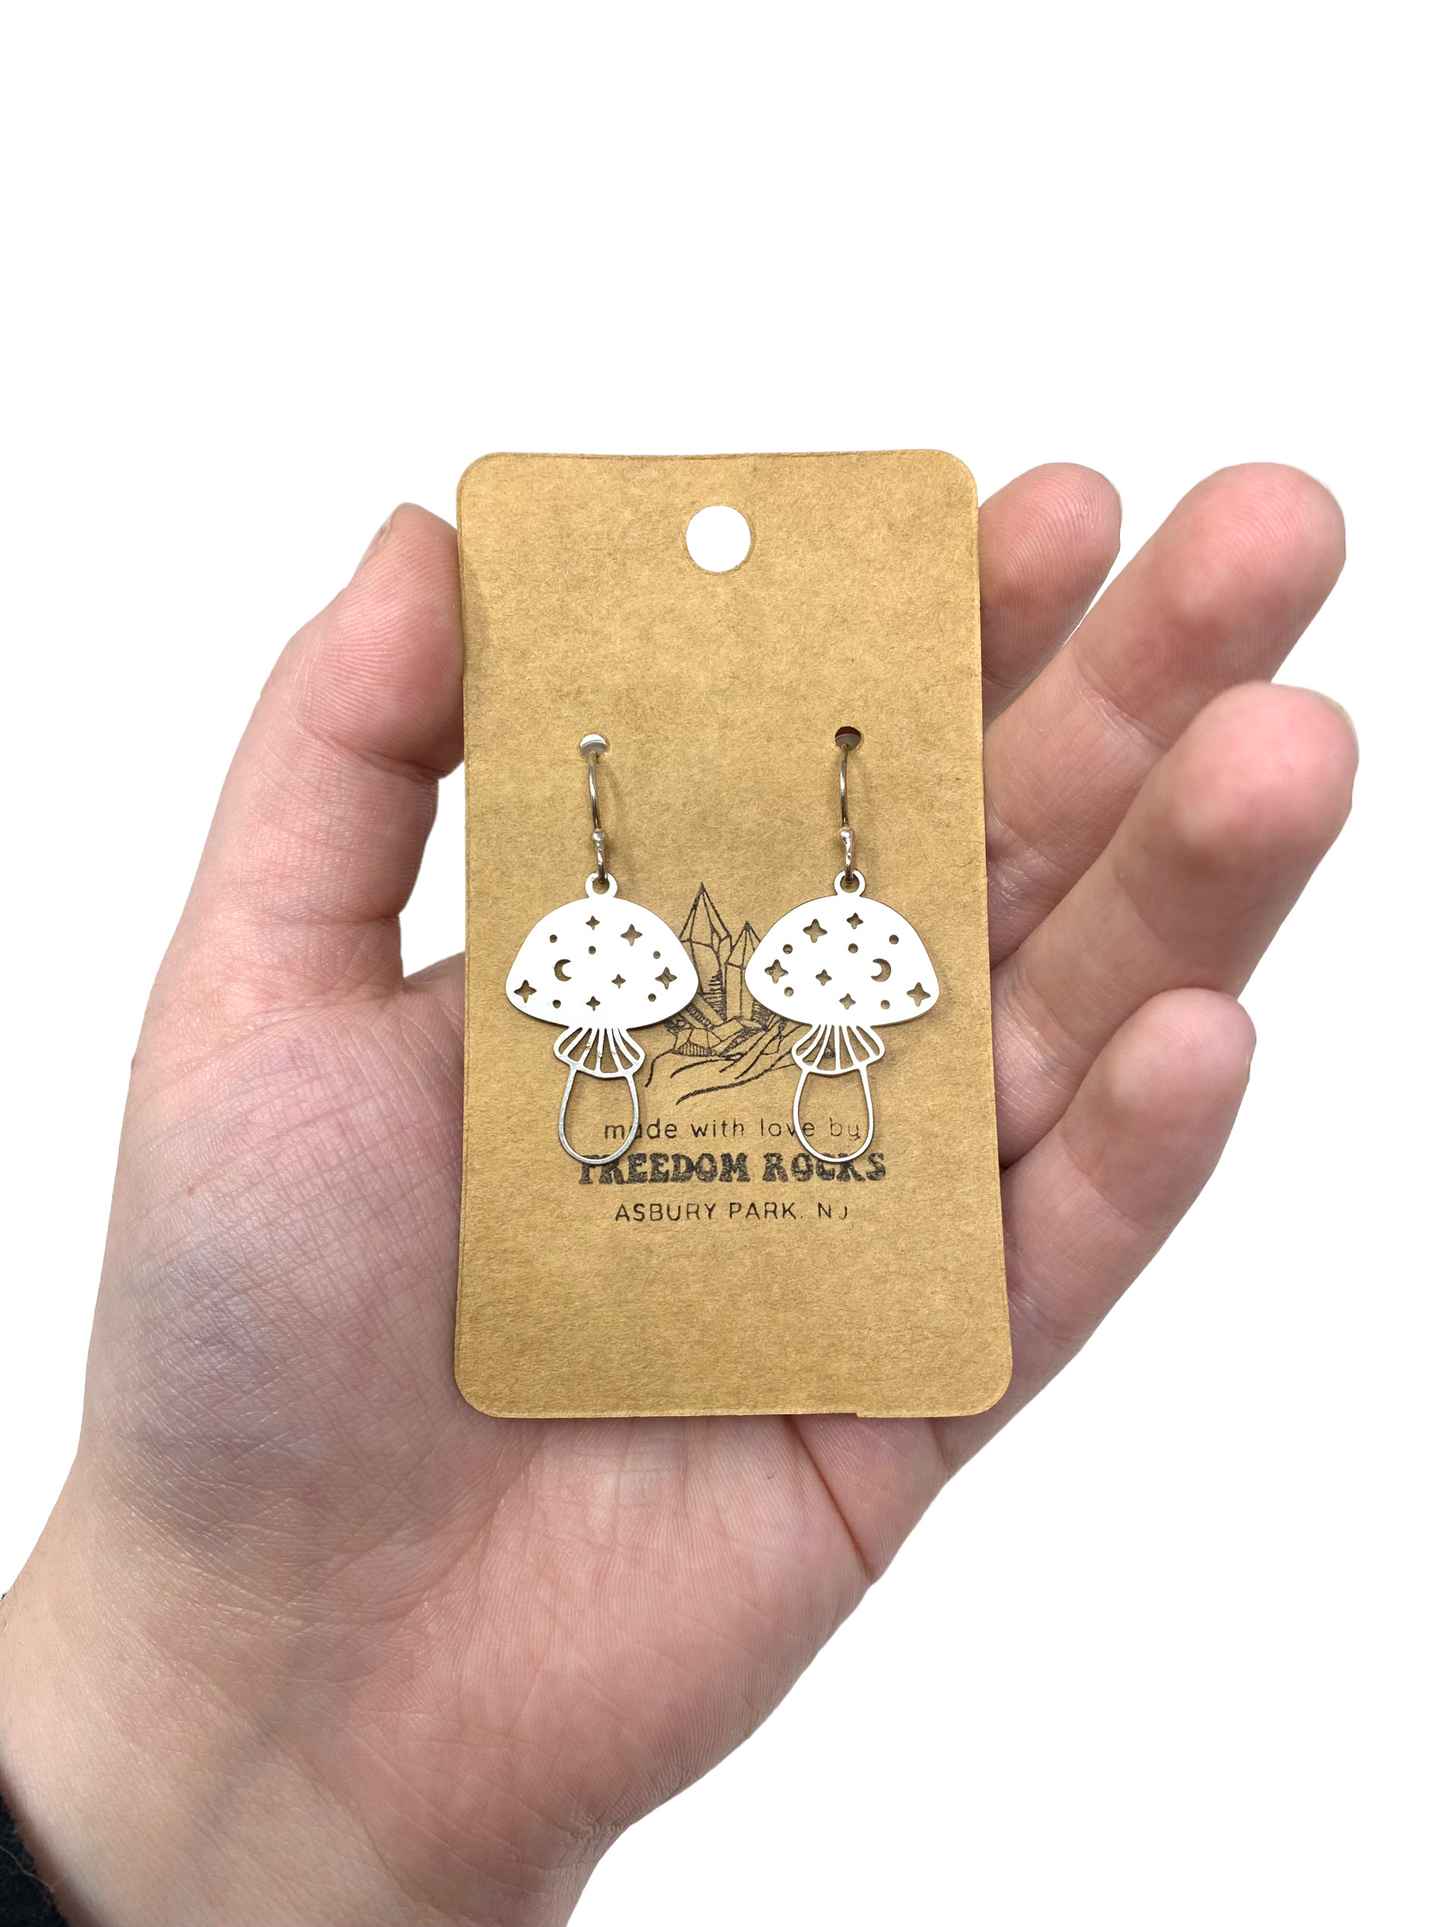 Silver Mushroom Earrings